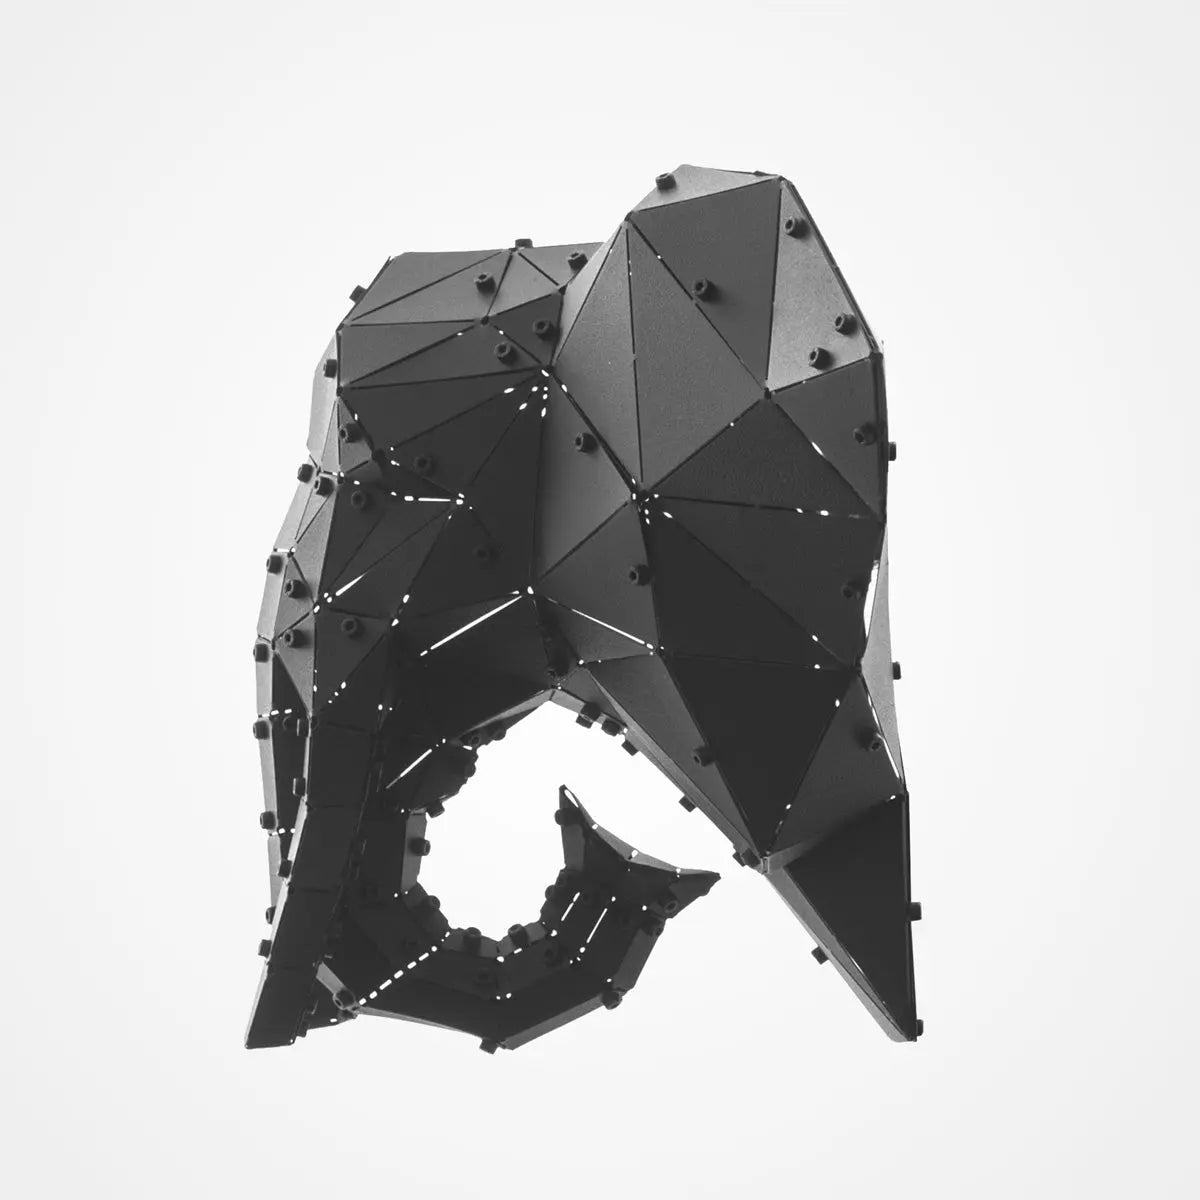 BARRUS V2 | 3D Metal Geometric Elephant Head Wall Decor OTTOCKRAFT™